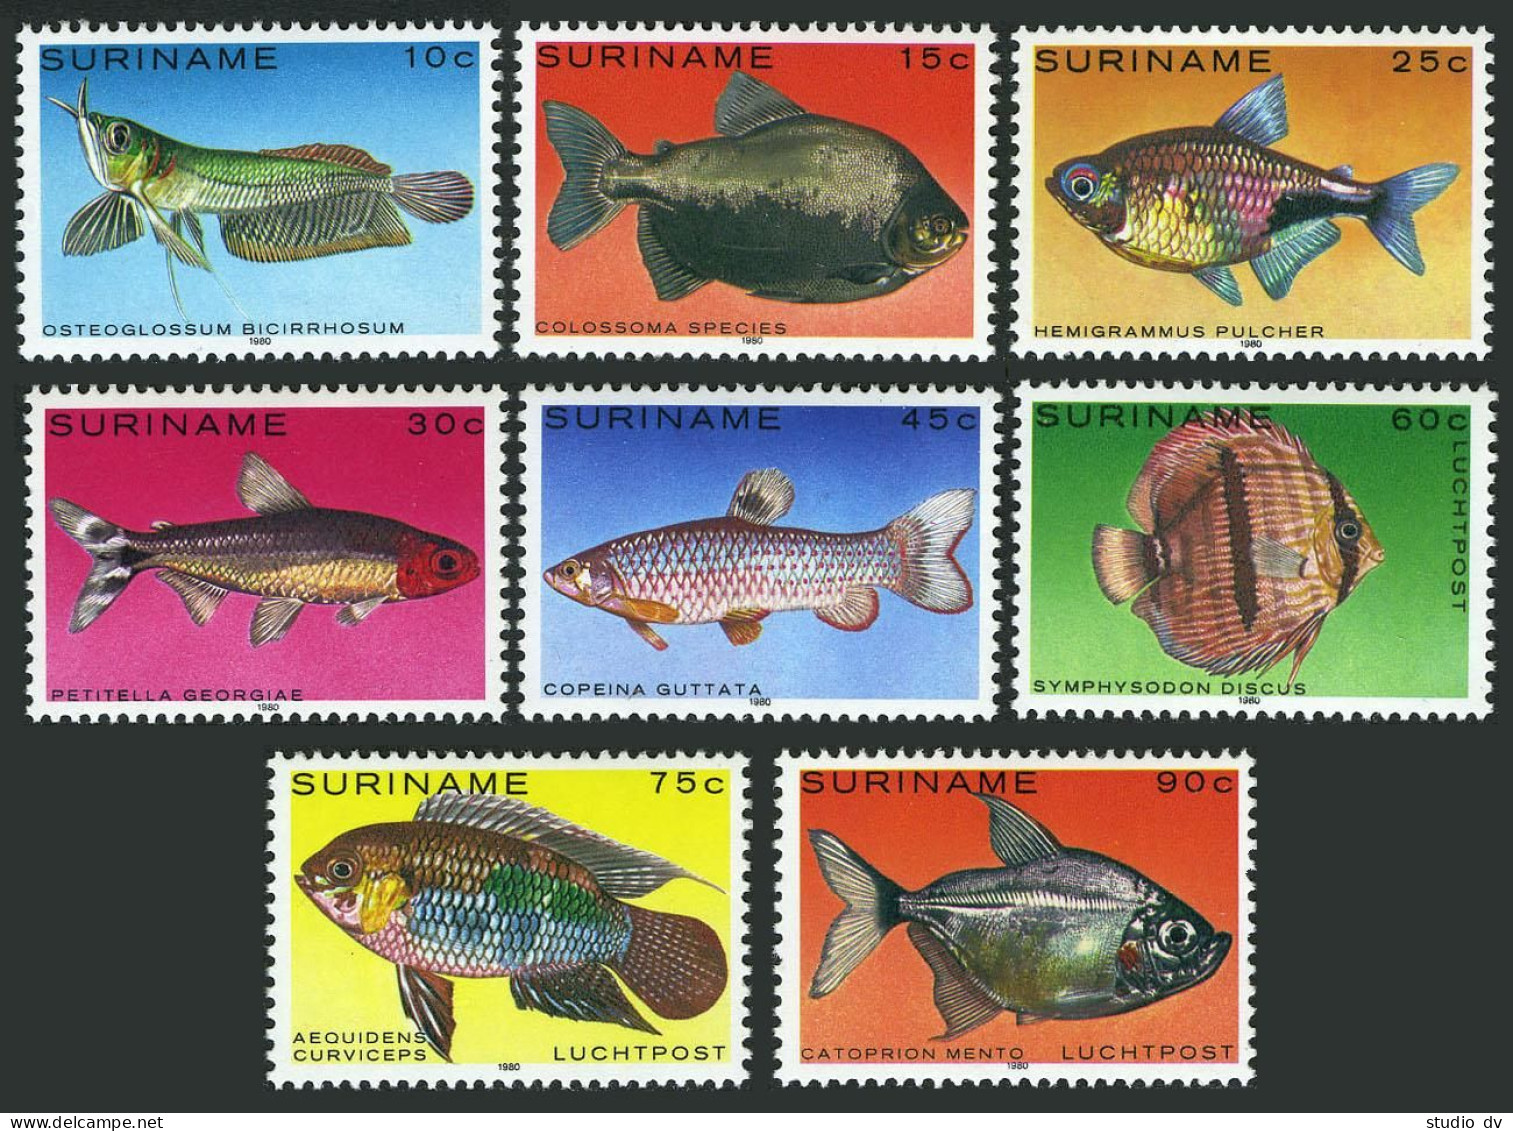 Surinam 557-561, C92-C94, MNH. Michel 910-917. Tropical Fish, 1980. - Suriname